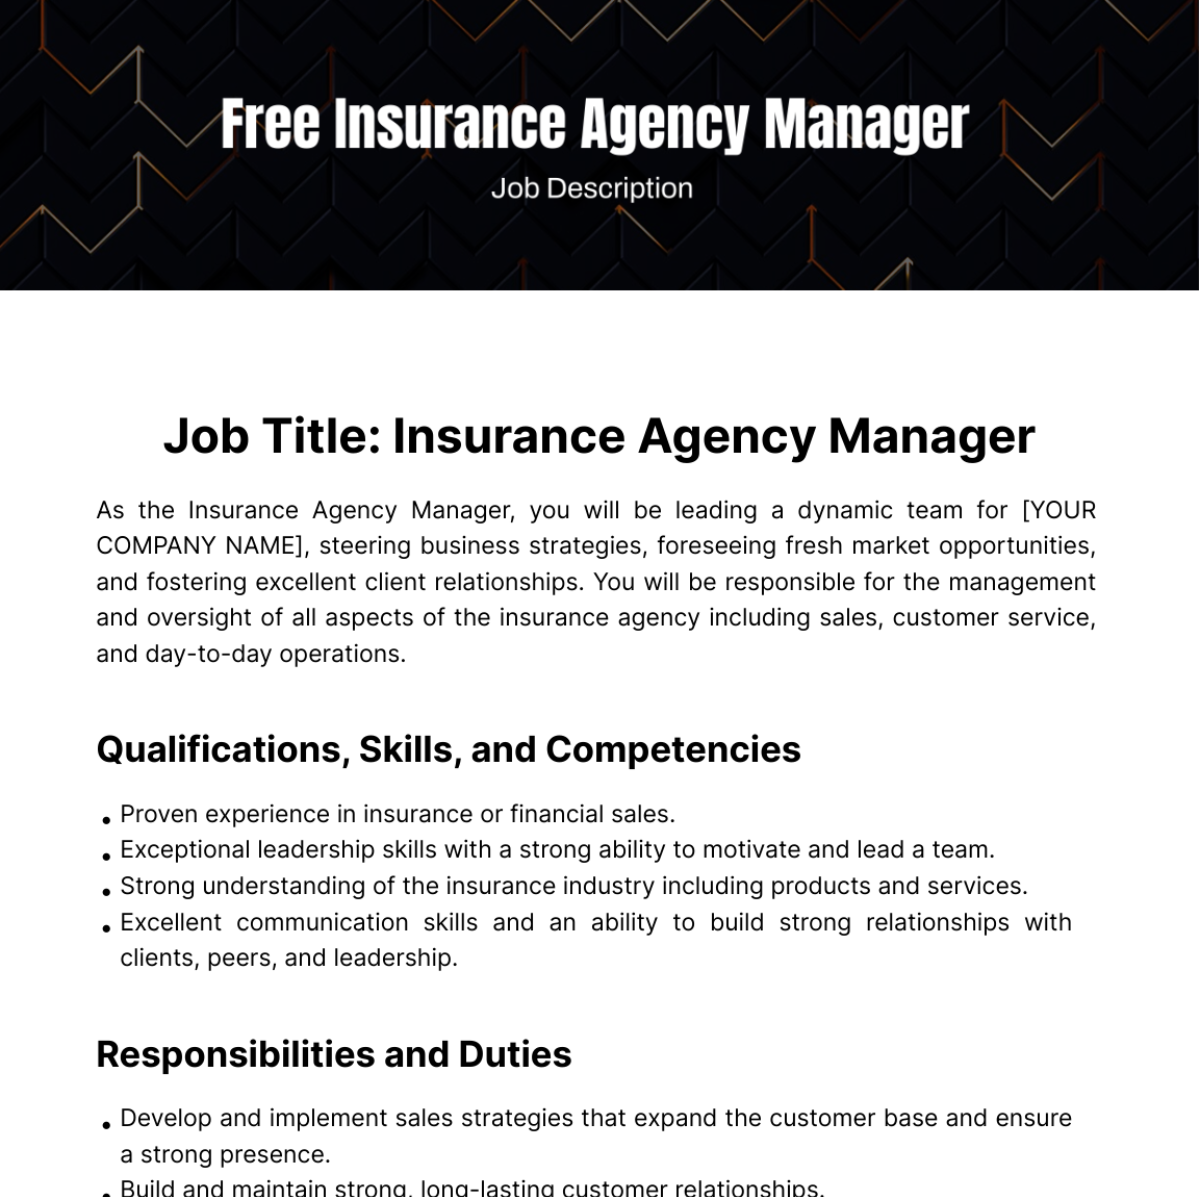 Insurance Agency Manager Job Description Template